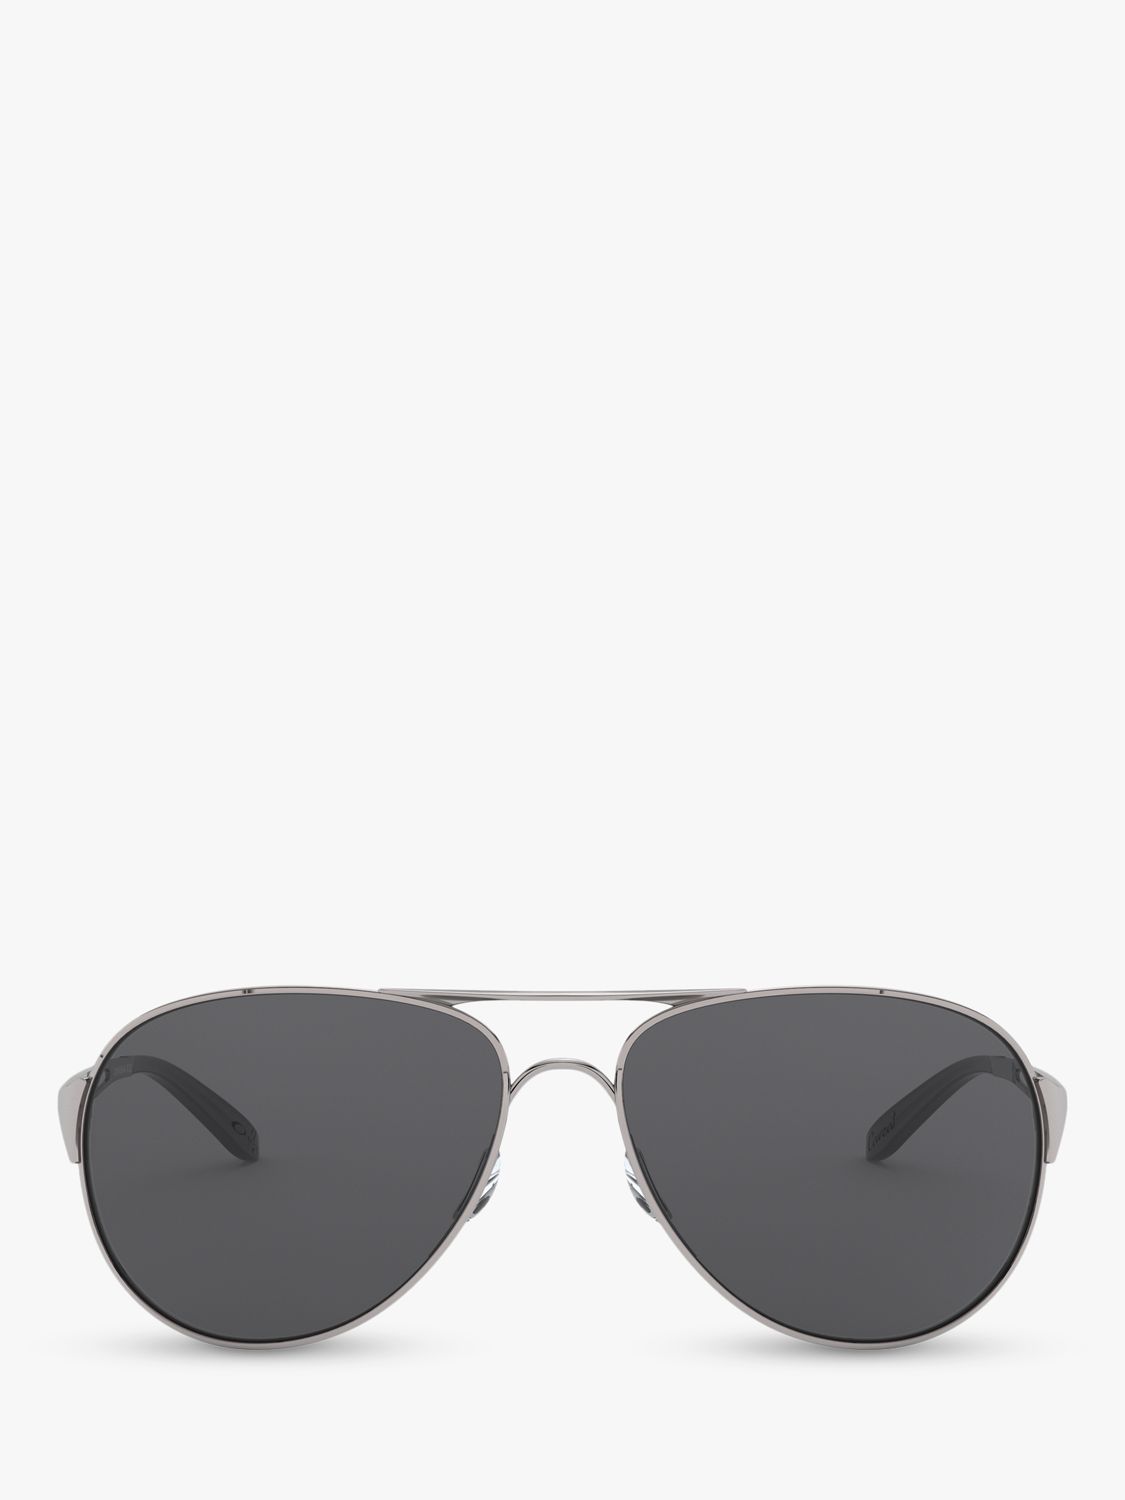 Oakley OO4054 Women's Caveat Pilot Sunglasses, Polished Chrome/Grey